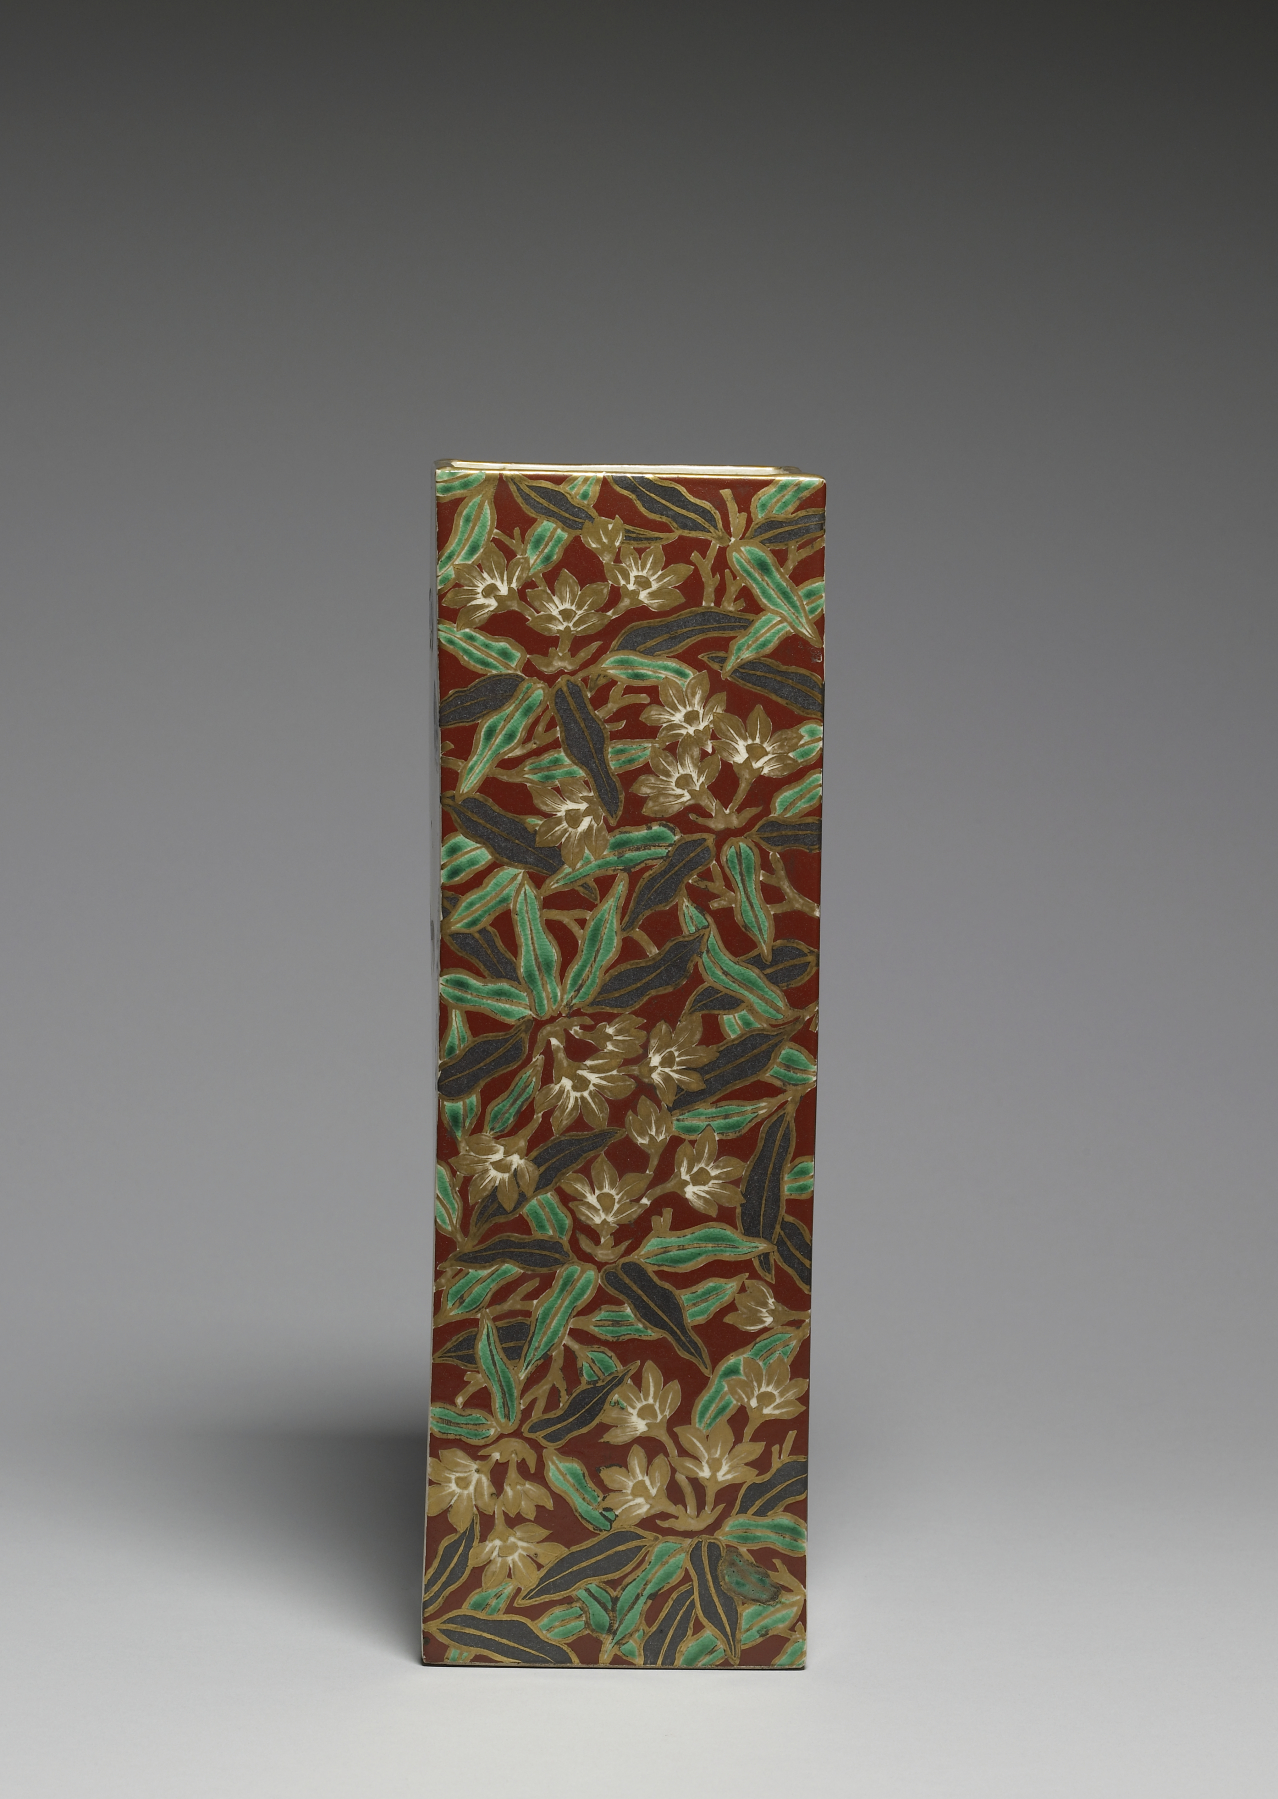 Image for Calendar Vase with Pomegrante Blossoms and 1705 Calendar